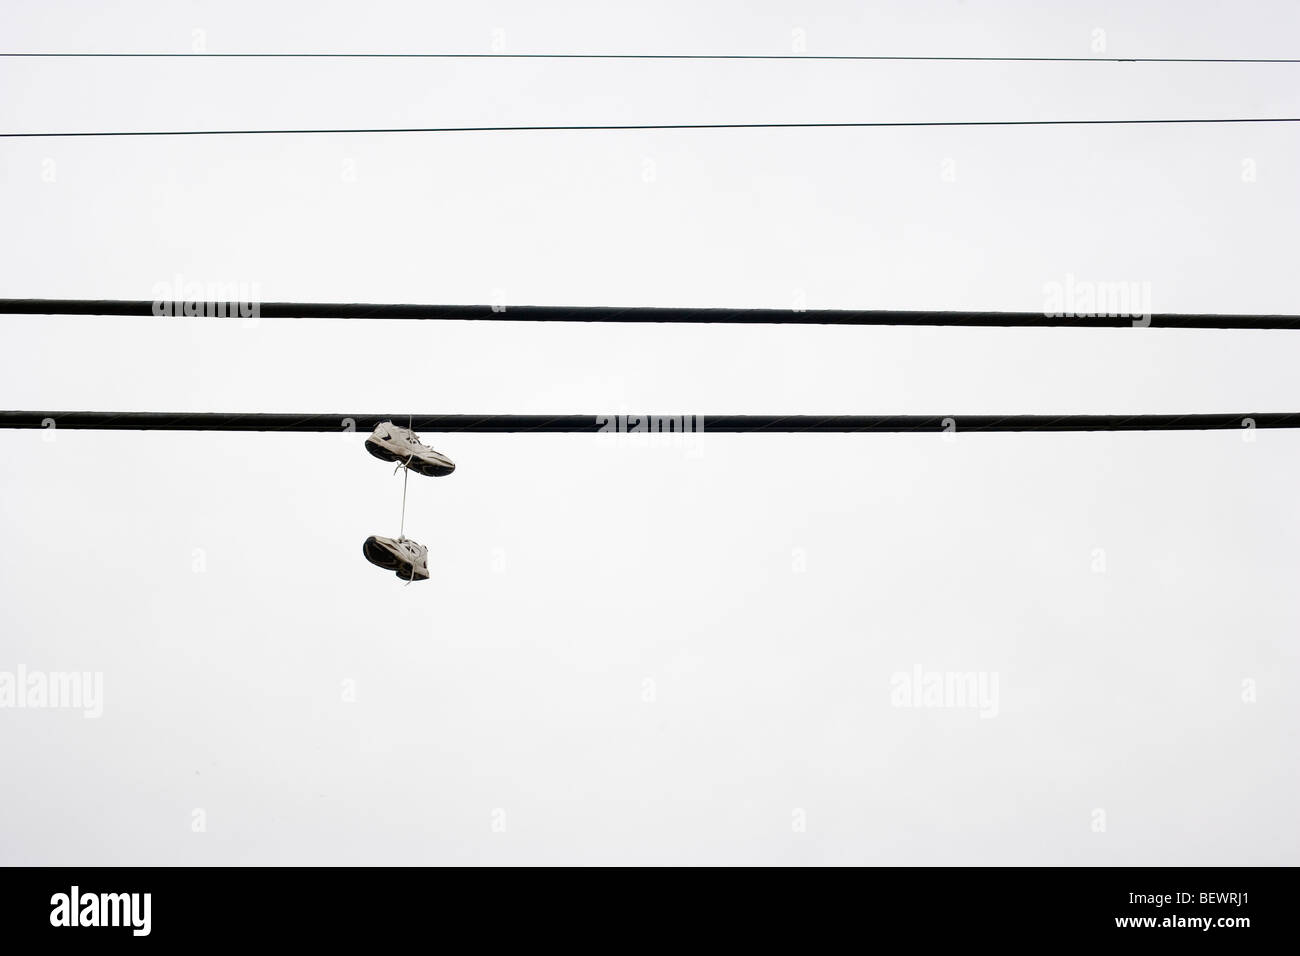 Zapatillas tirados por cables telefónicos Foto de stock